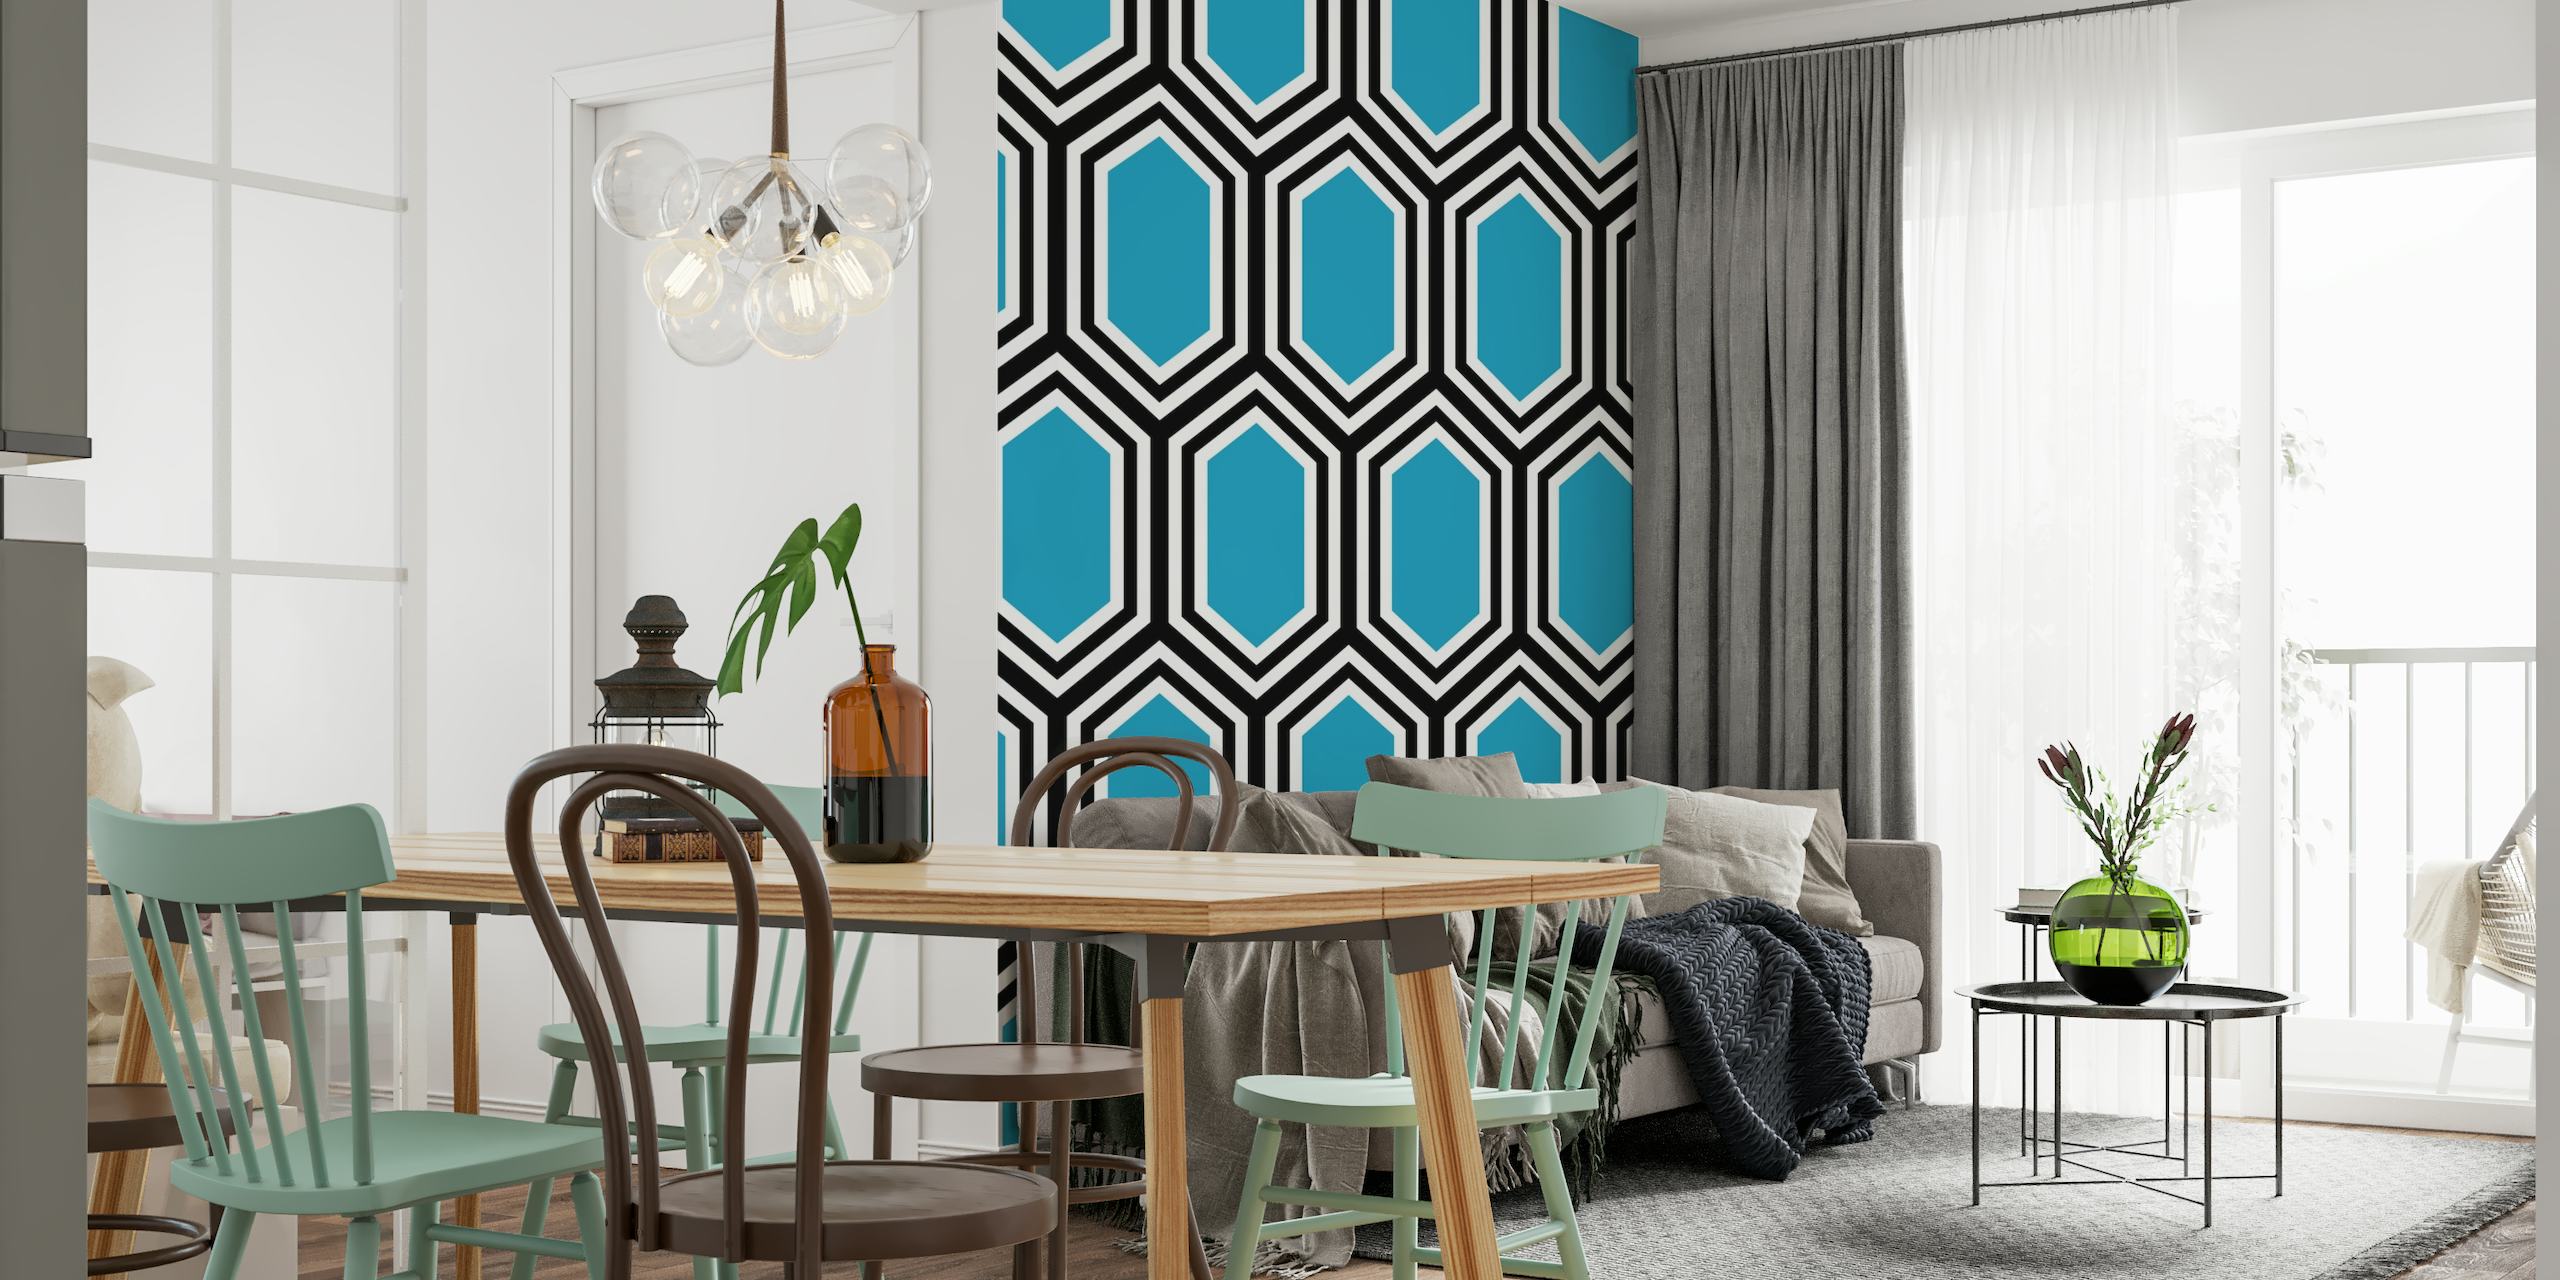 Turquoise geometric wallpaper